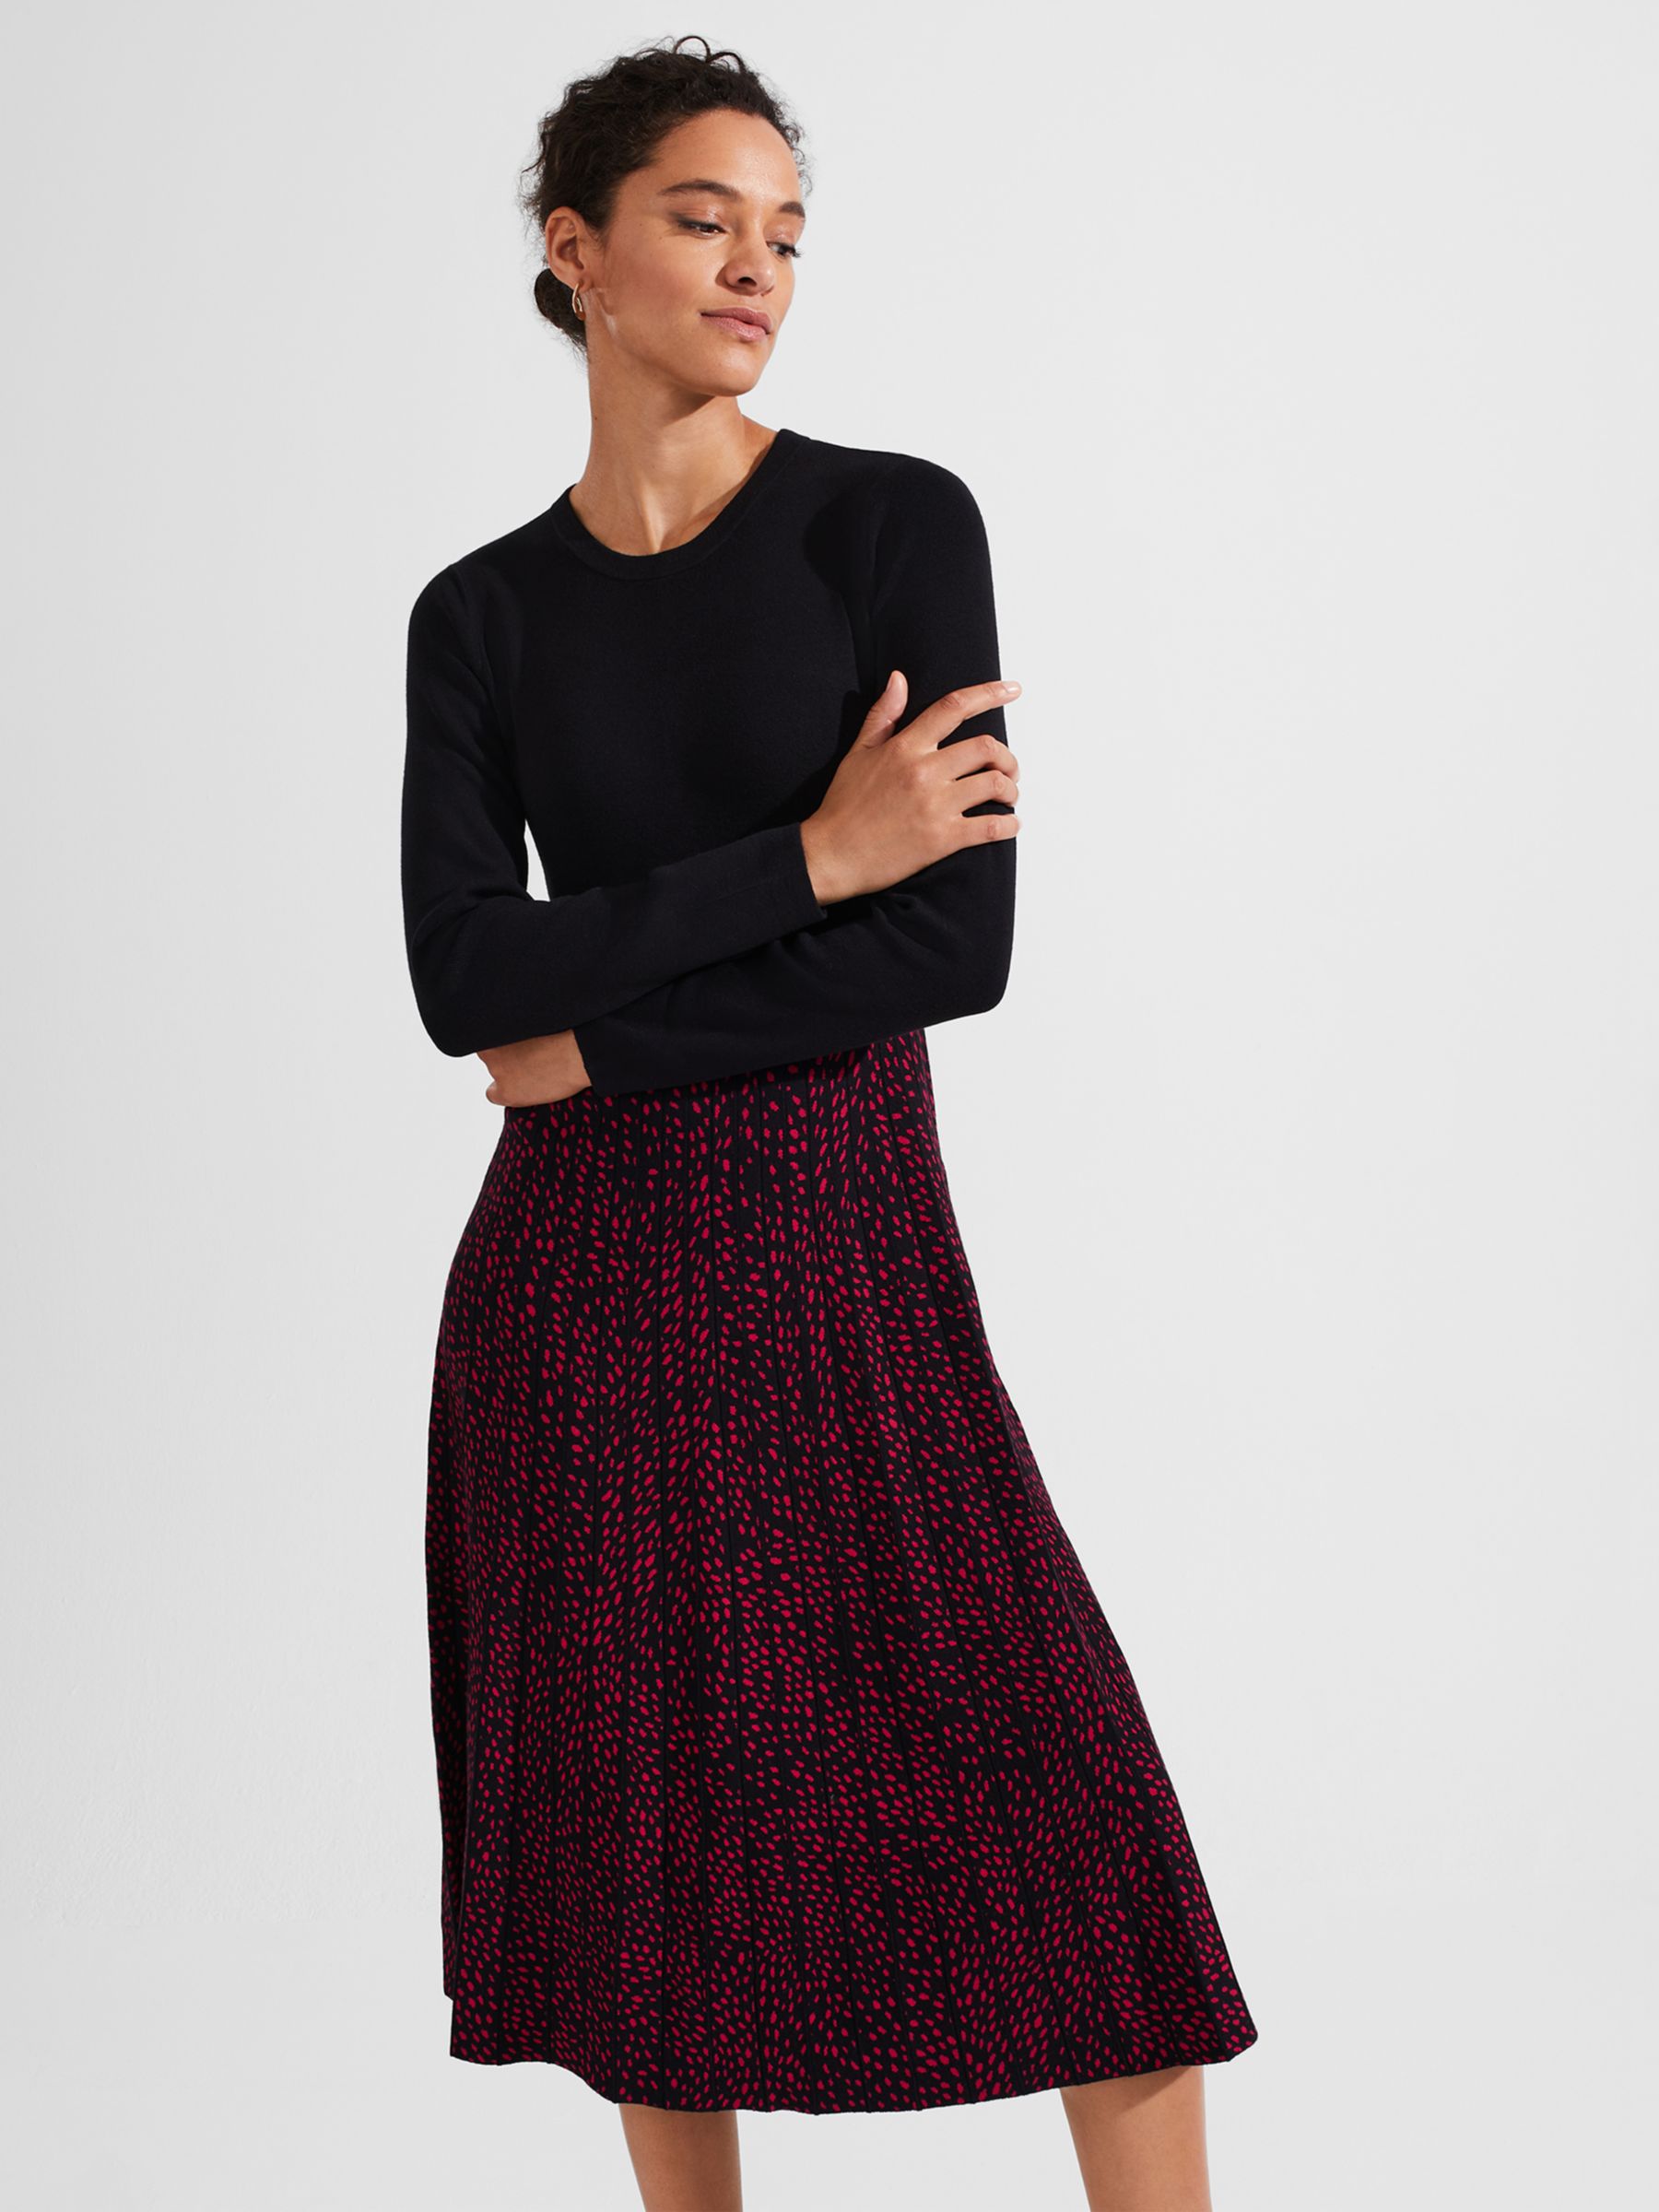 Hobbs Harlie Knitted Dress, Black Cerise at John Lewis & Partners